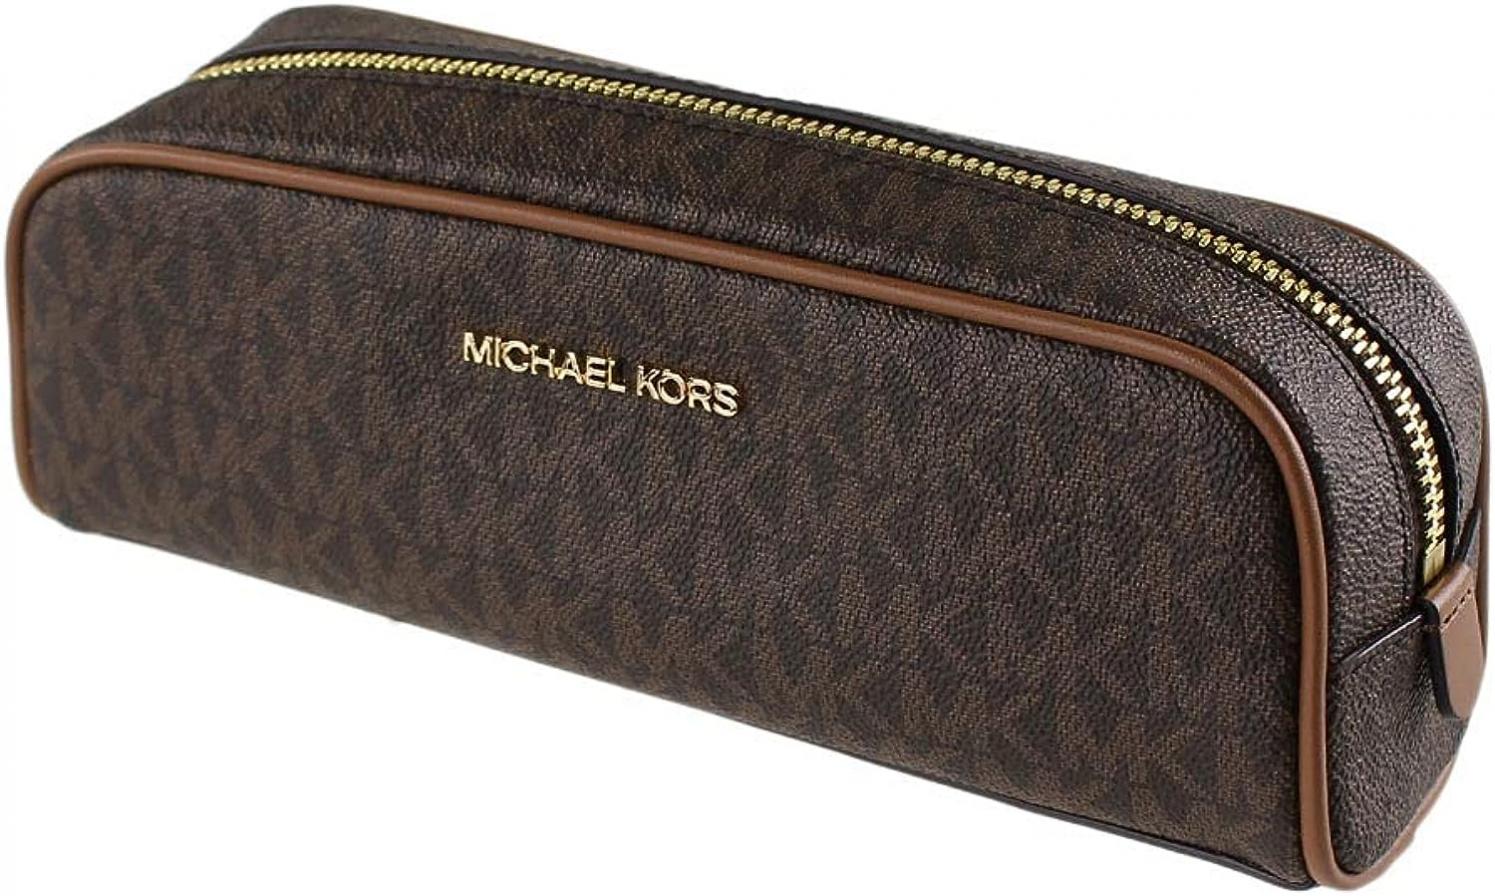 Michael Kors Giftables Medium Pencil Case Signature Leather Makeup Case (Brown)